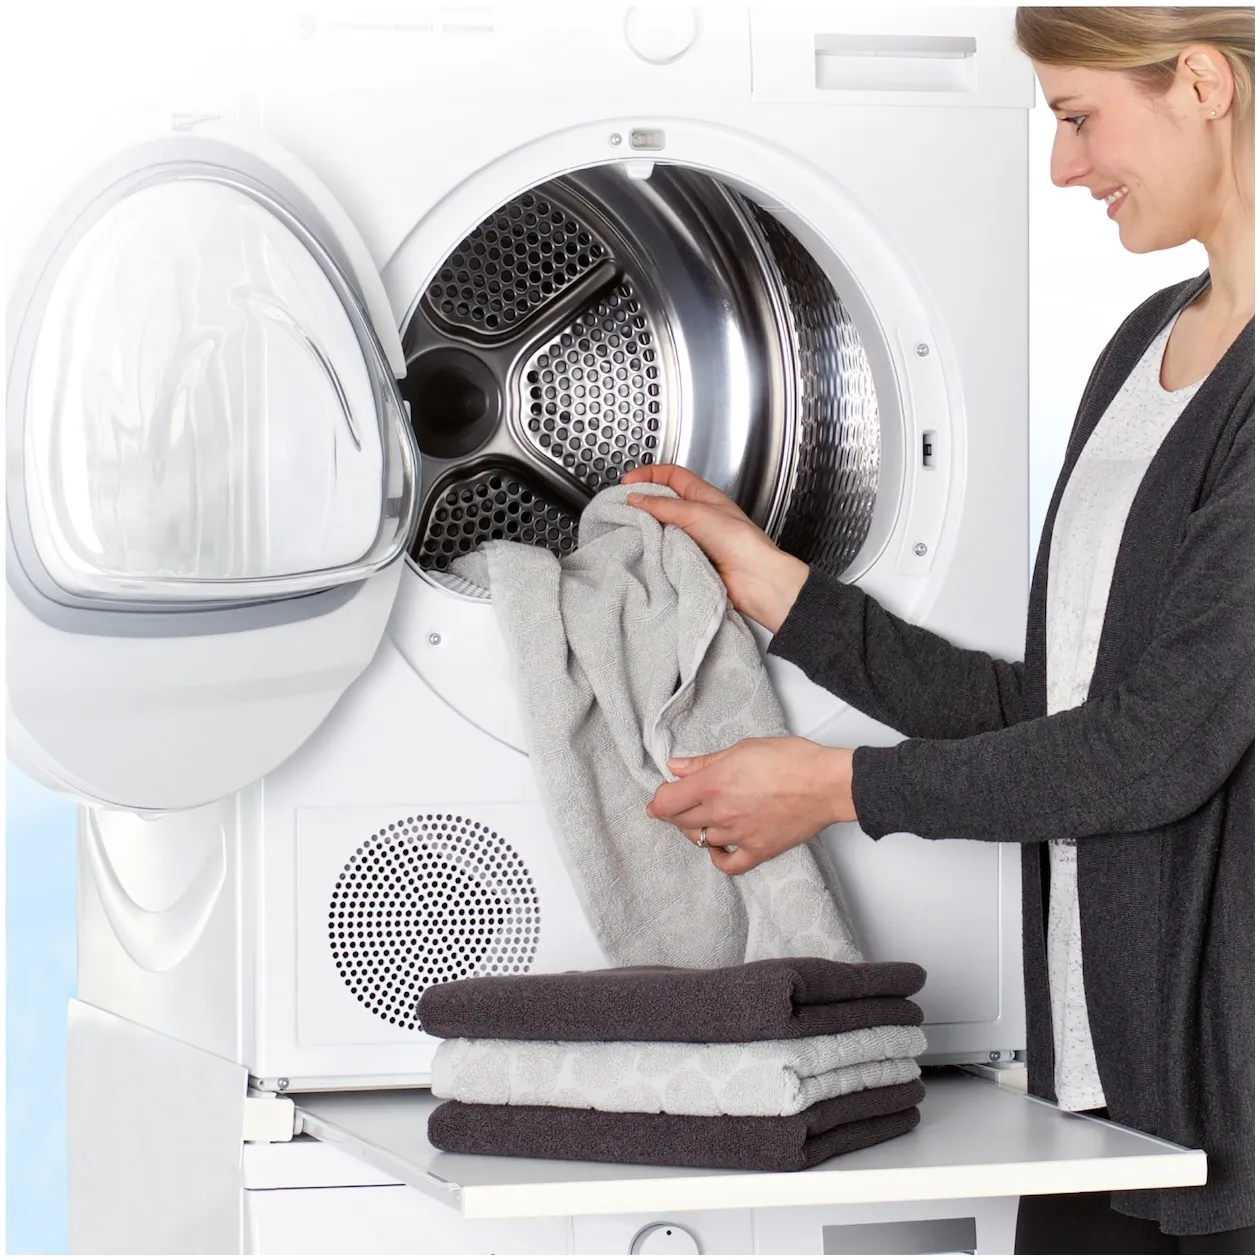 Scanpart tussenkader voor wasmachine en droger met werkblad